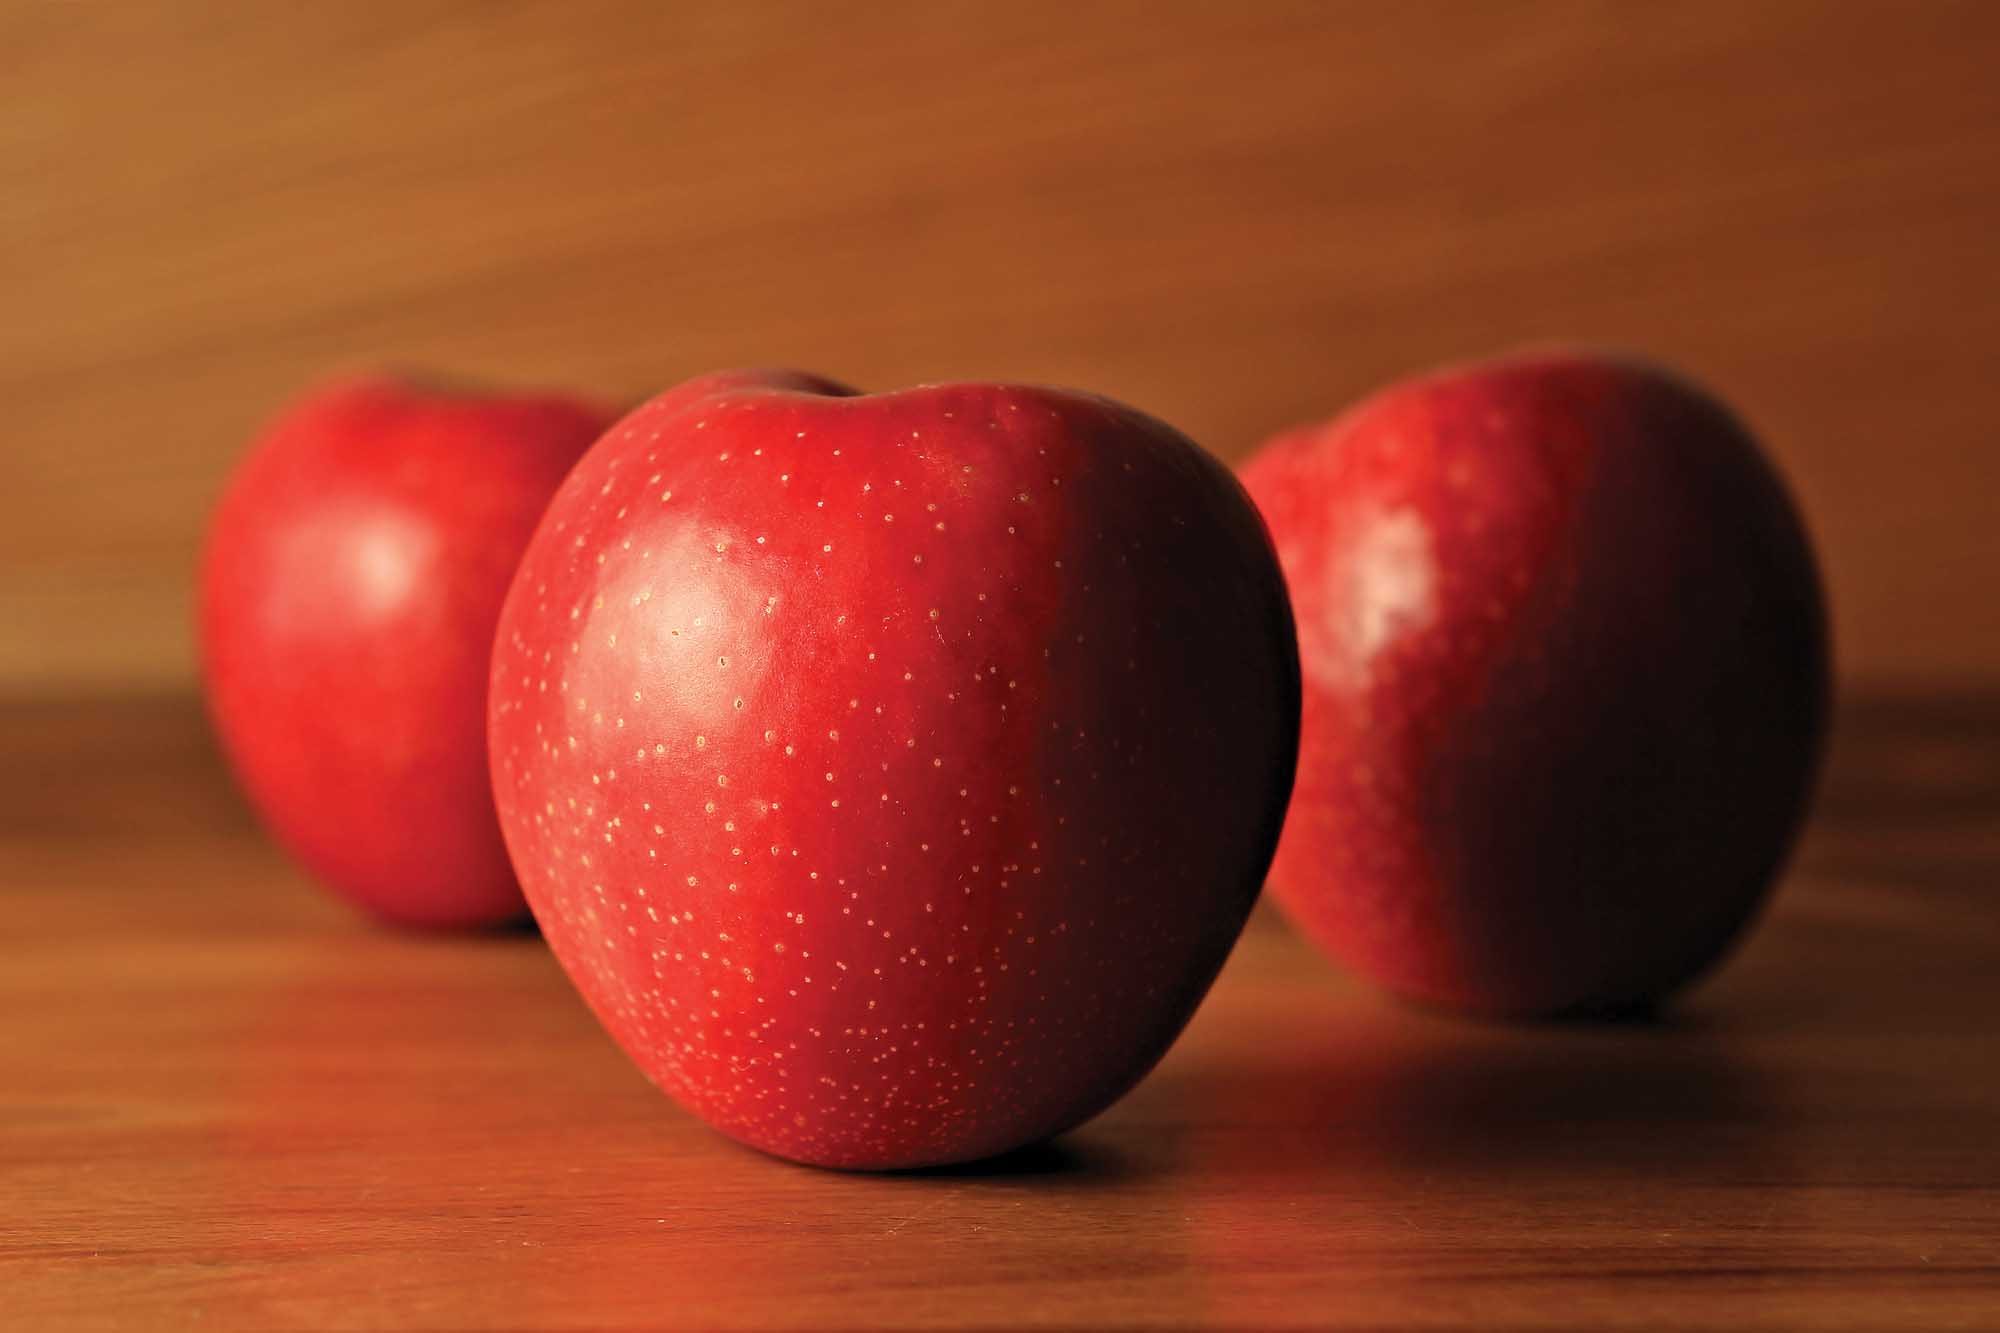 Shopper feedback strong on SweeTango variety apples